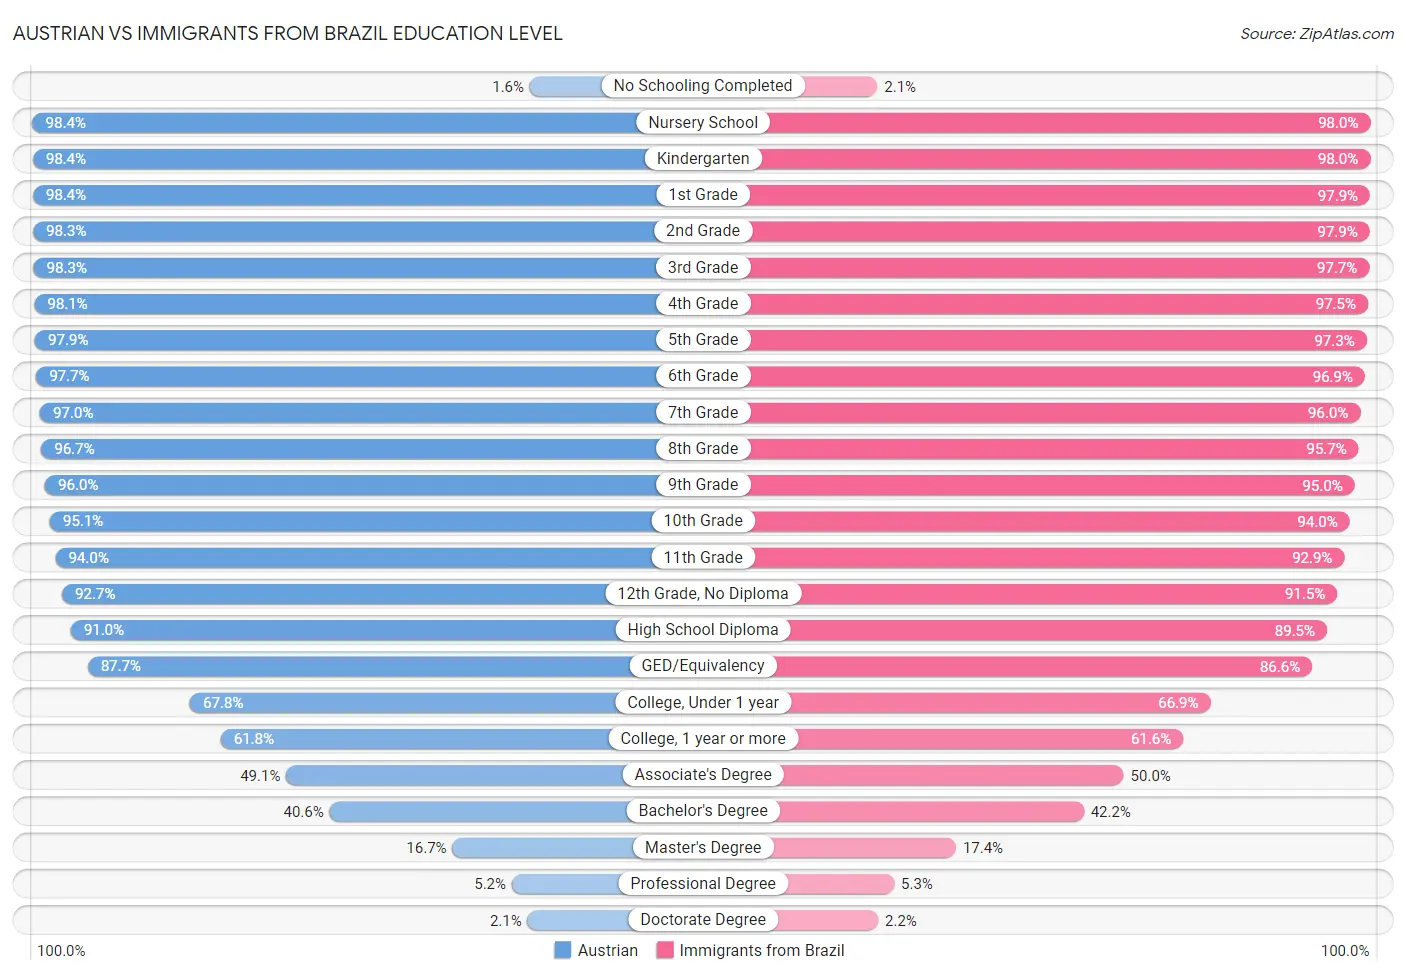 Austrian vs Immigrants from Brazil Education Level